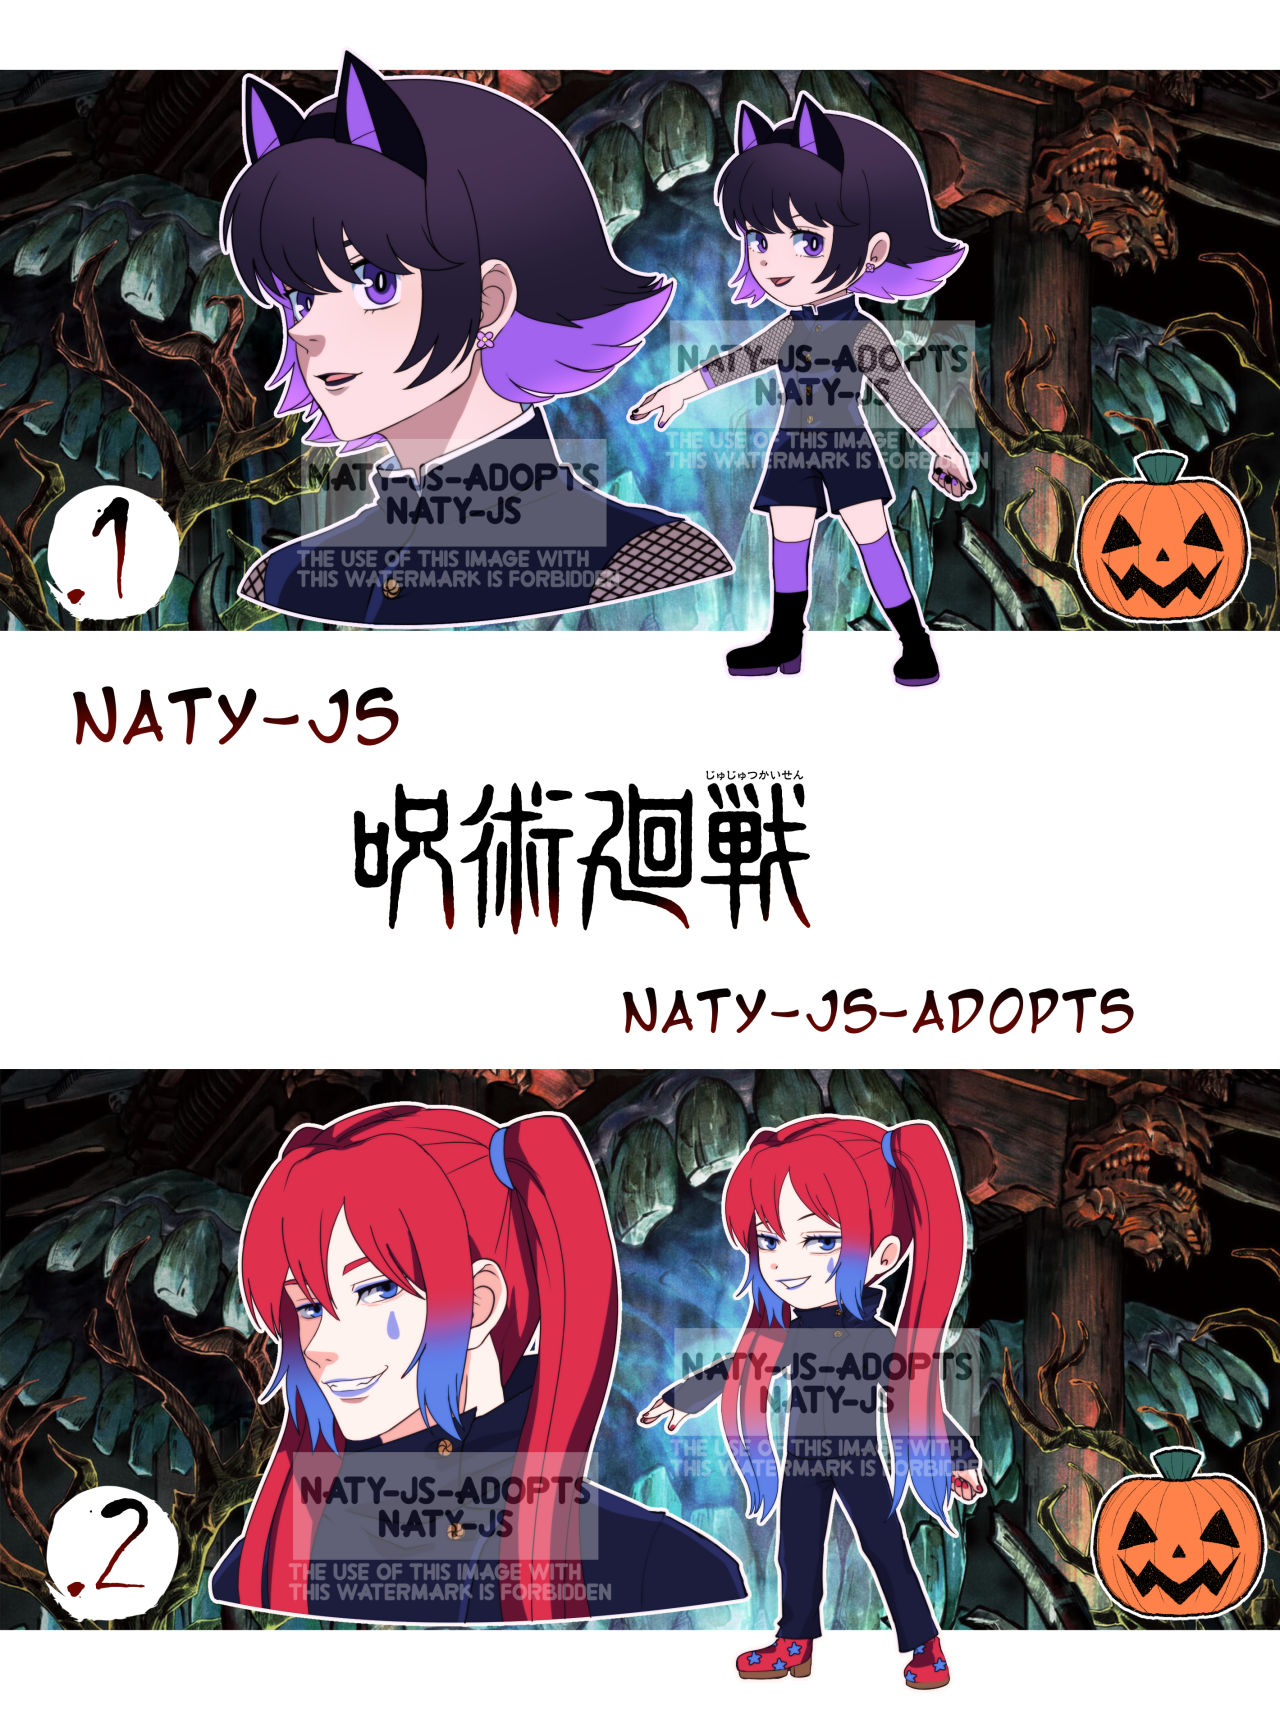 Kawaii Anime Poses by J-S-Cat on DeviantArt